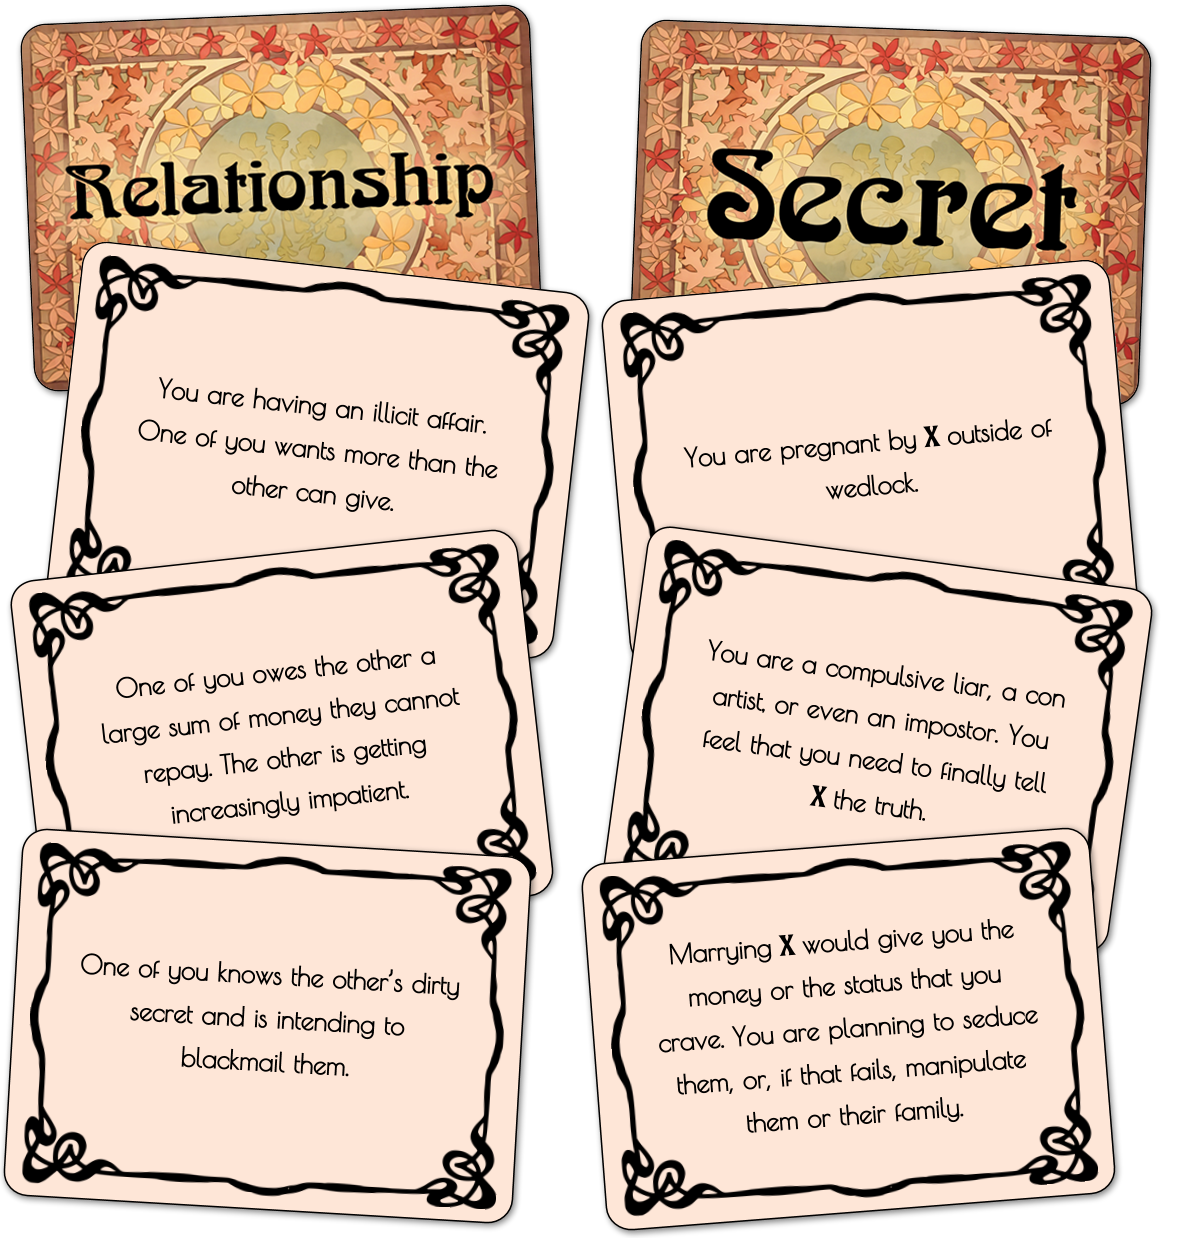 Relationship and Secret cards